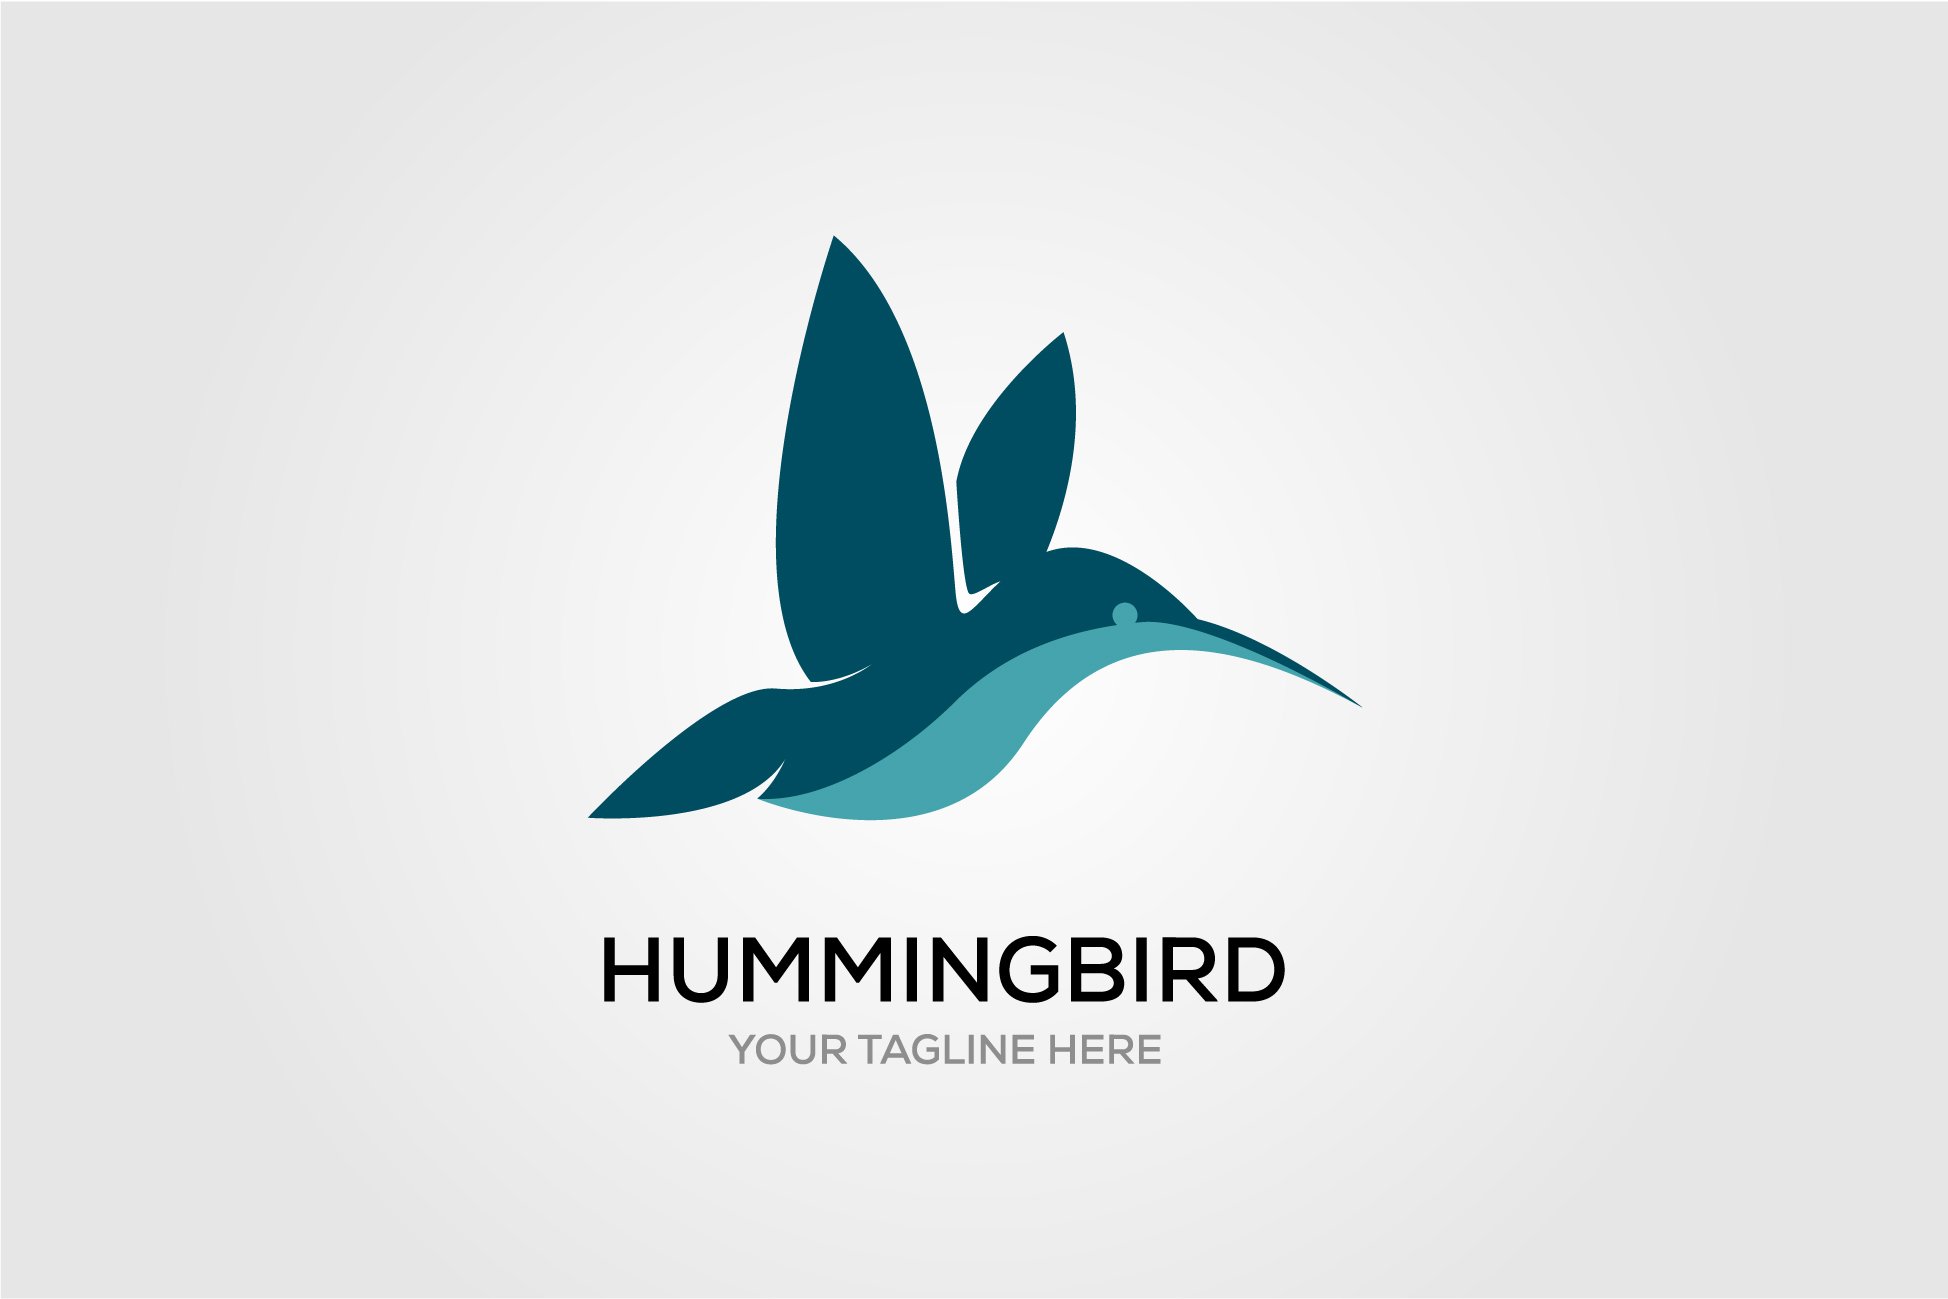 hummingbird vintage bird logo design cover image.